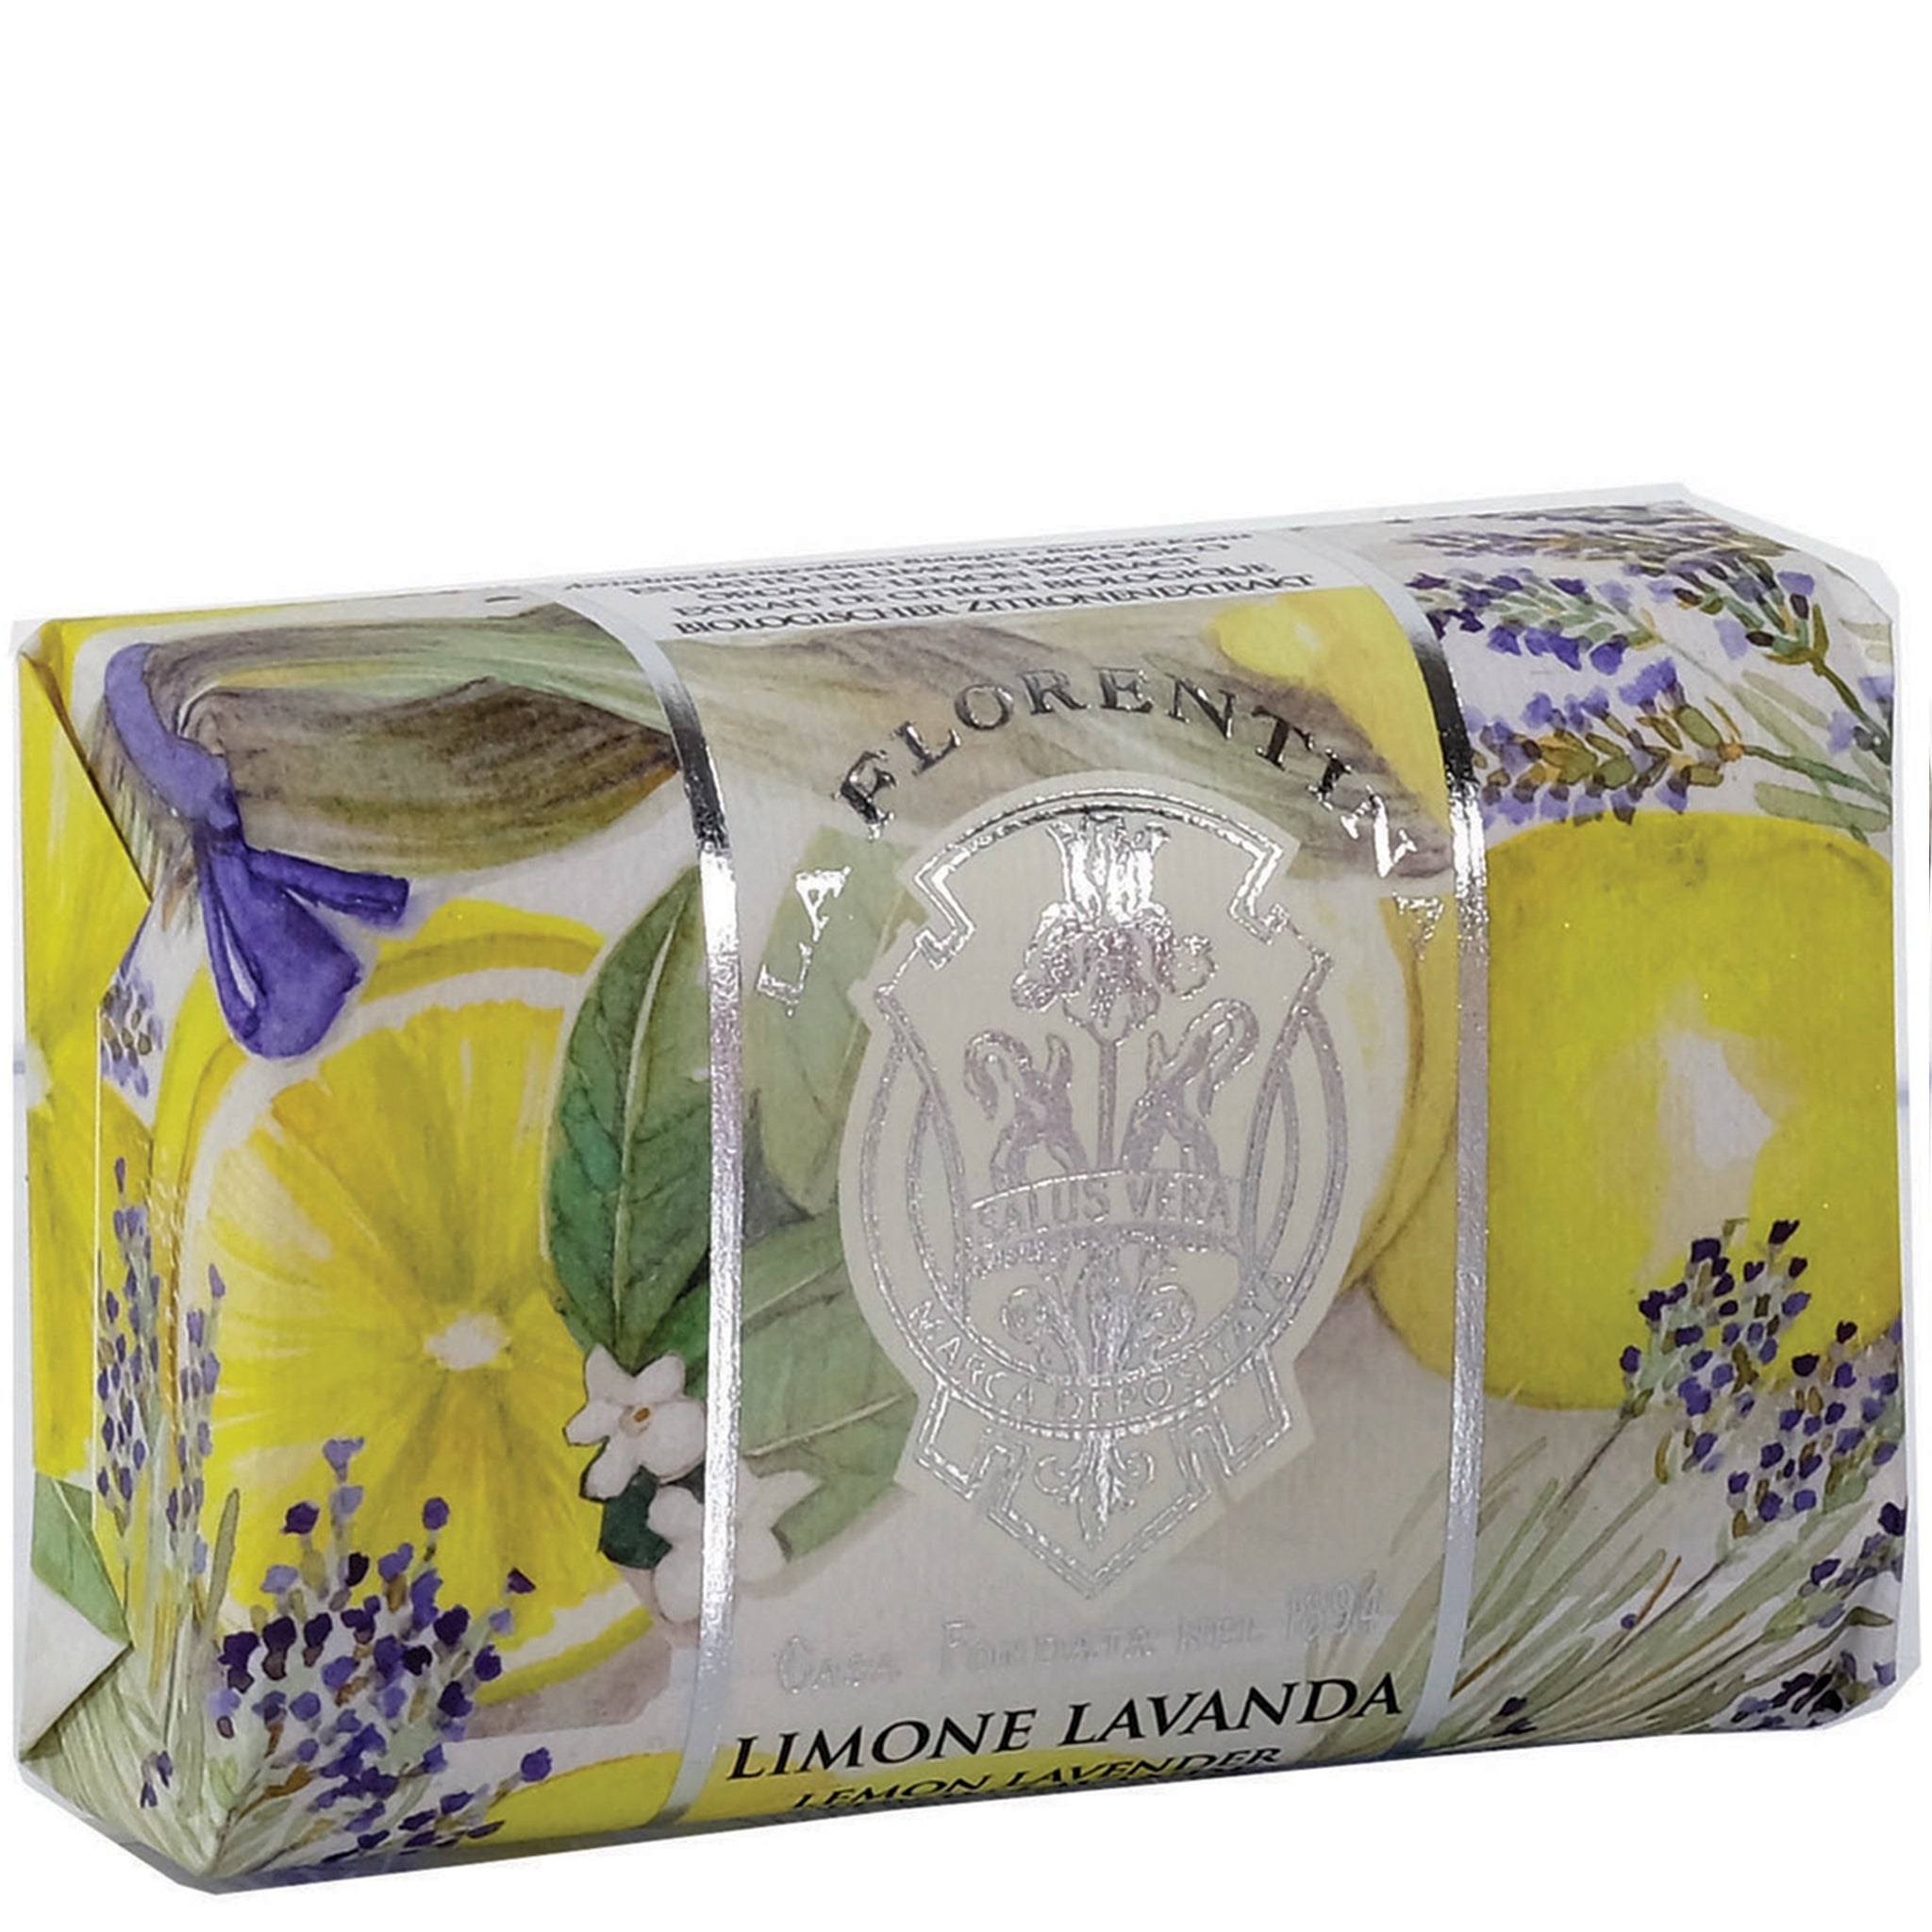 La Florentina Lemon Lavender 200g Bar Soap